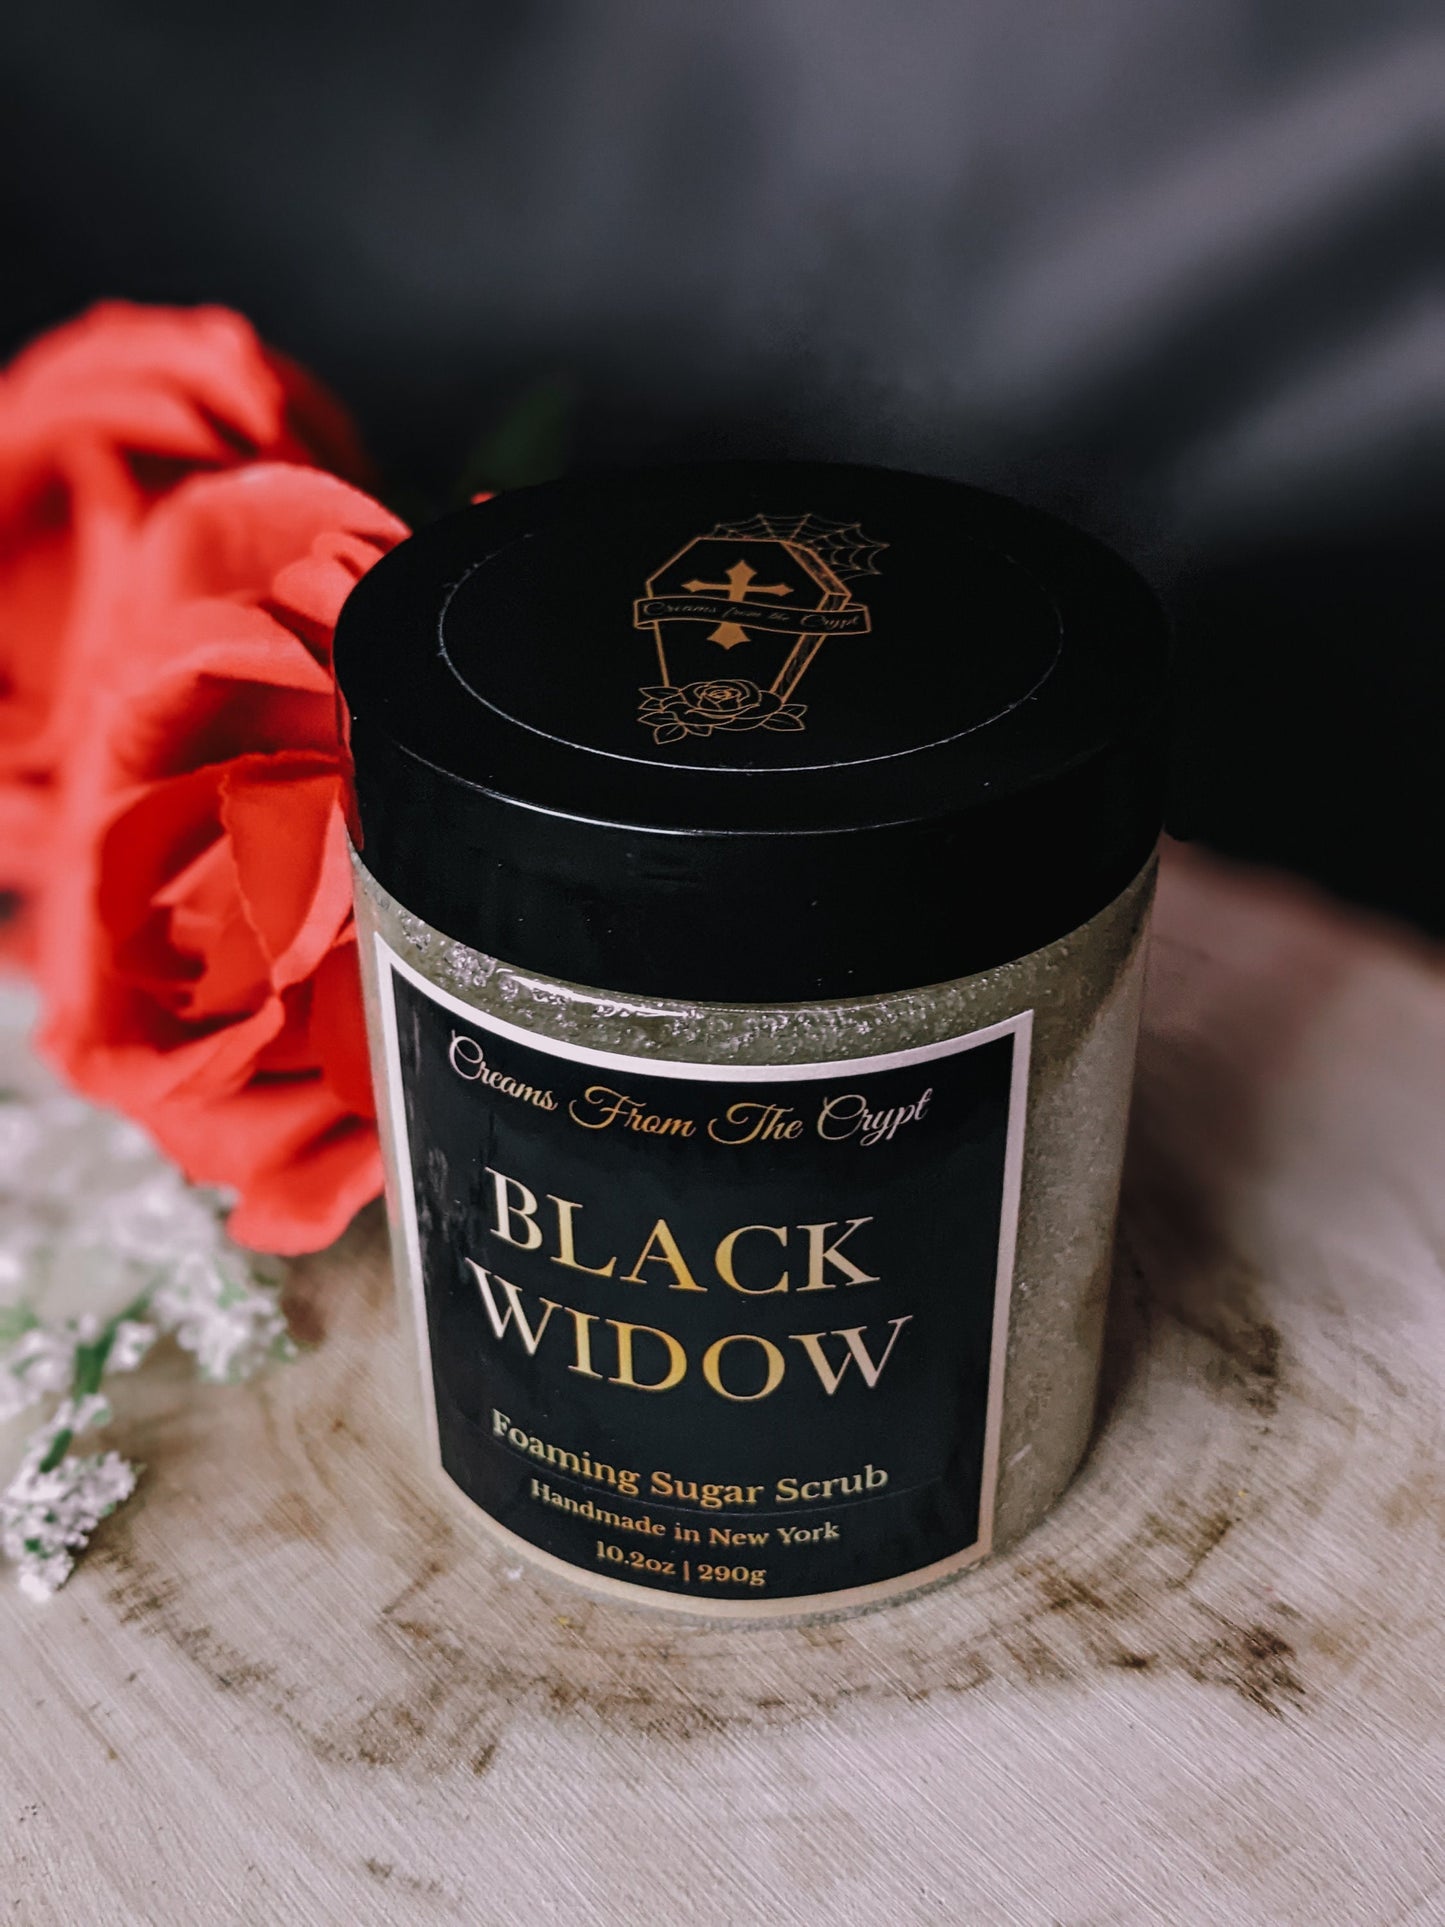 BLACK WIDOW - Cherry Merlot Foaming sugar scrub, body polish, soap + exfoliant, fruity fragrance, sulfate free, gothic skincare, gift idea